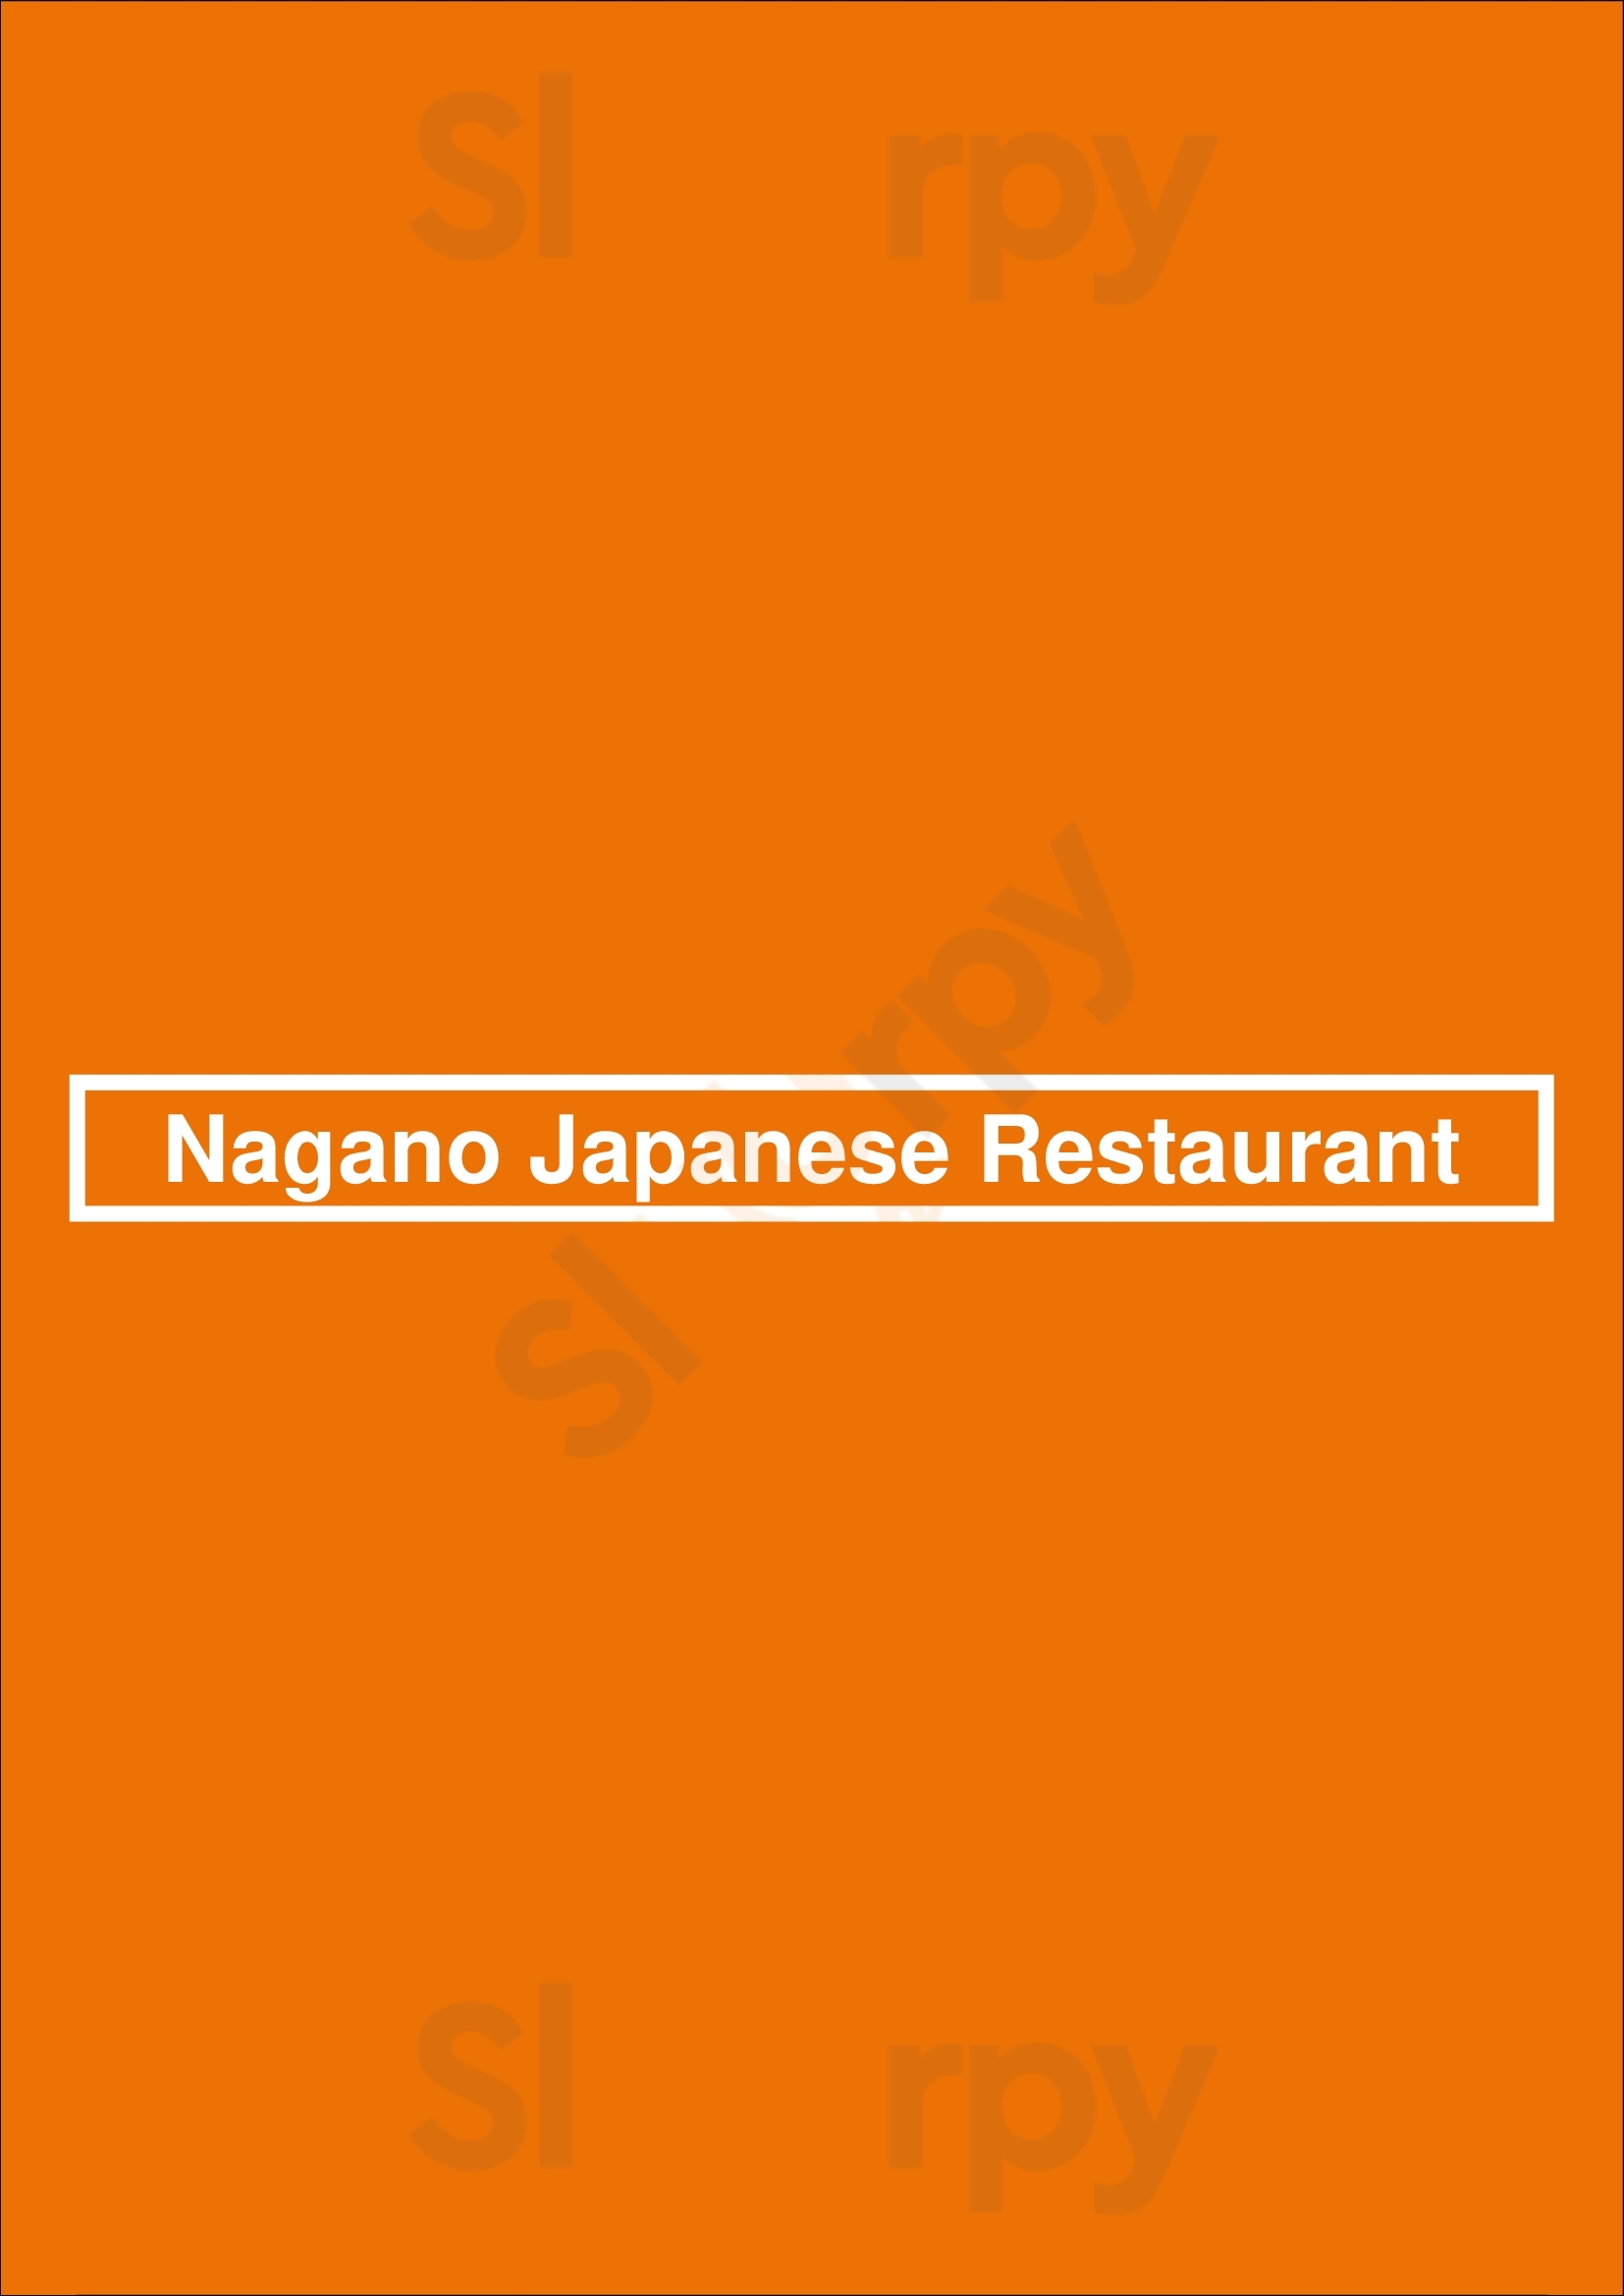 Nagano Japanese Restaurant Coquitlam Menu - 1